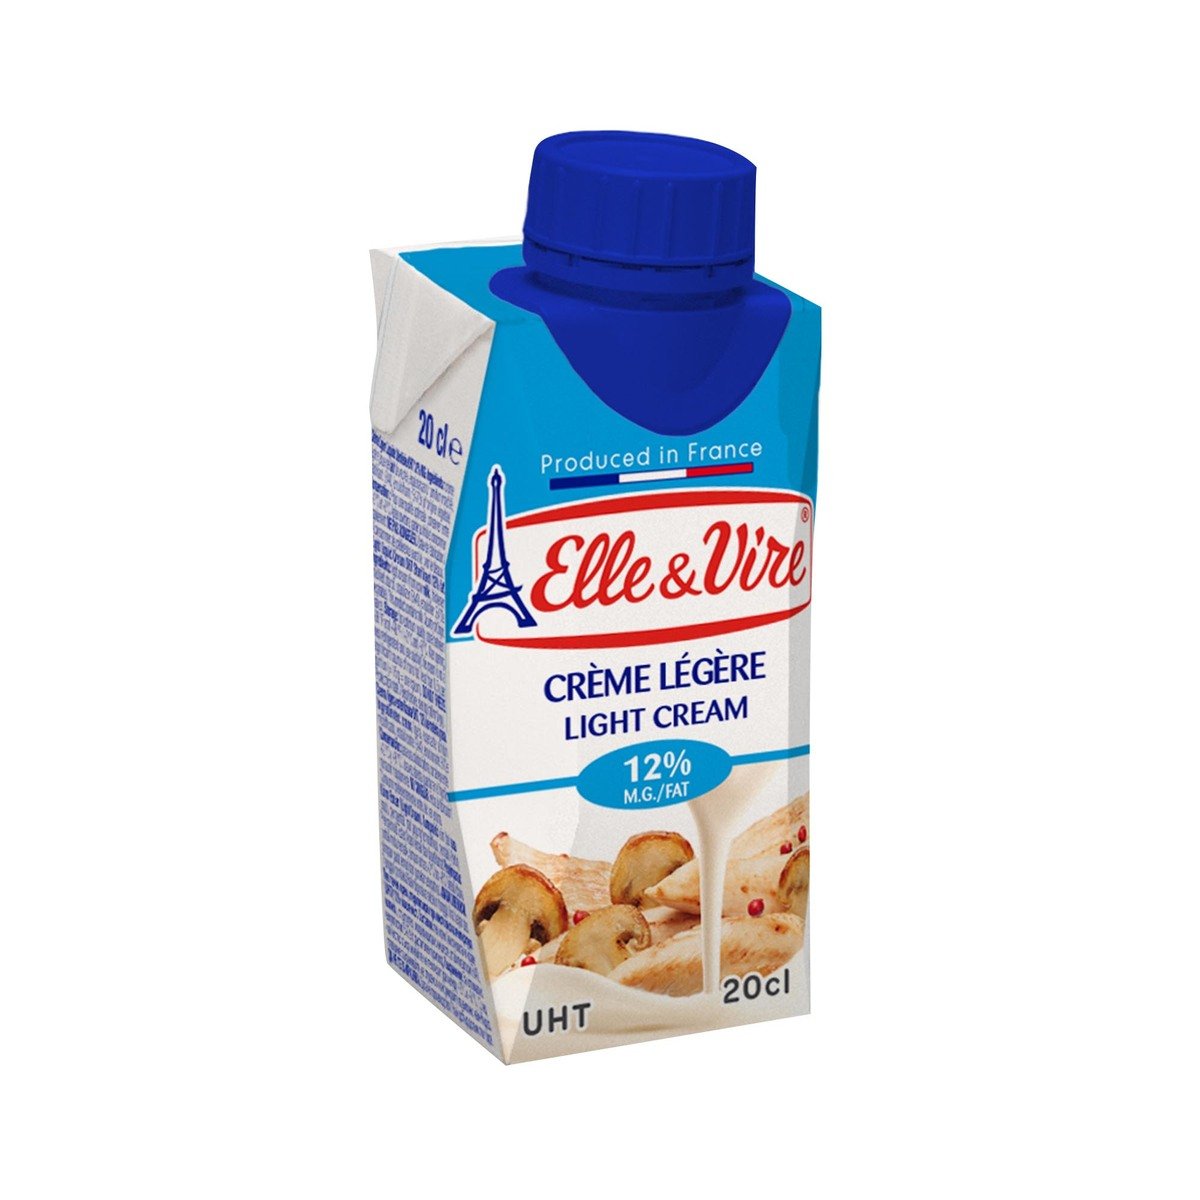 Elle & Vire UHT Light Cream 200 ml